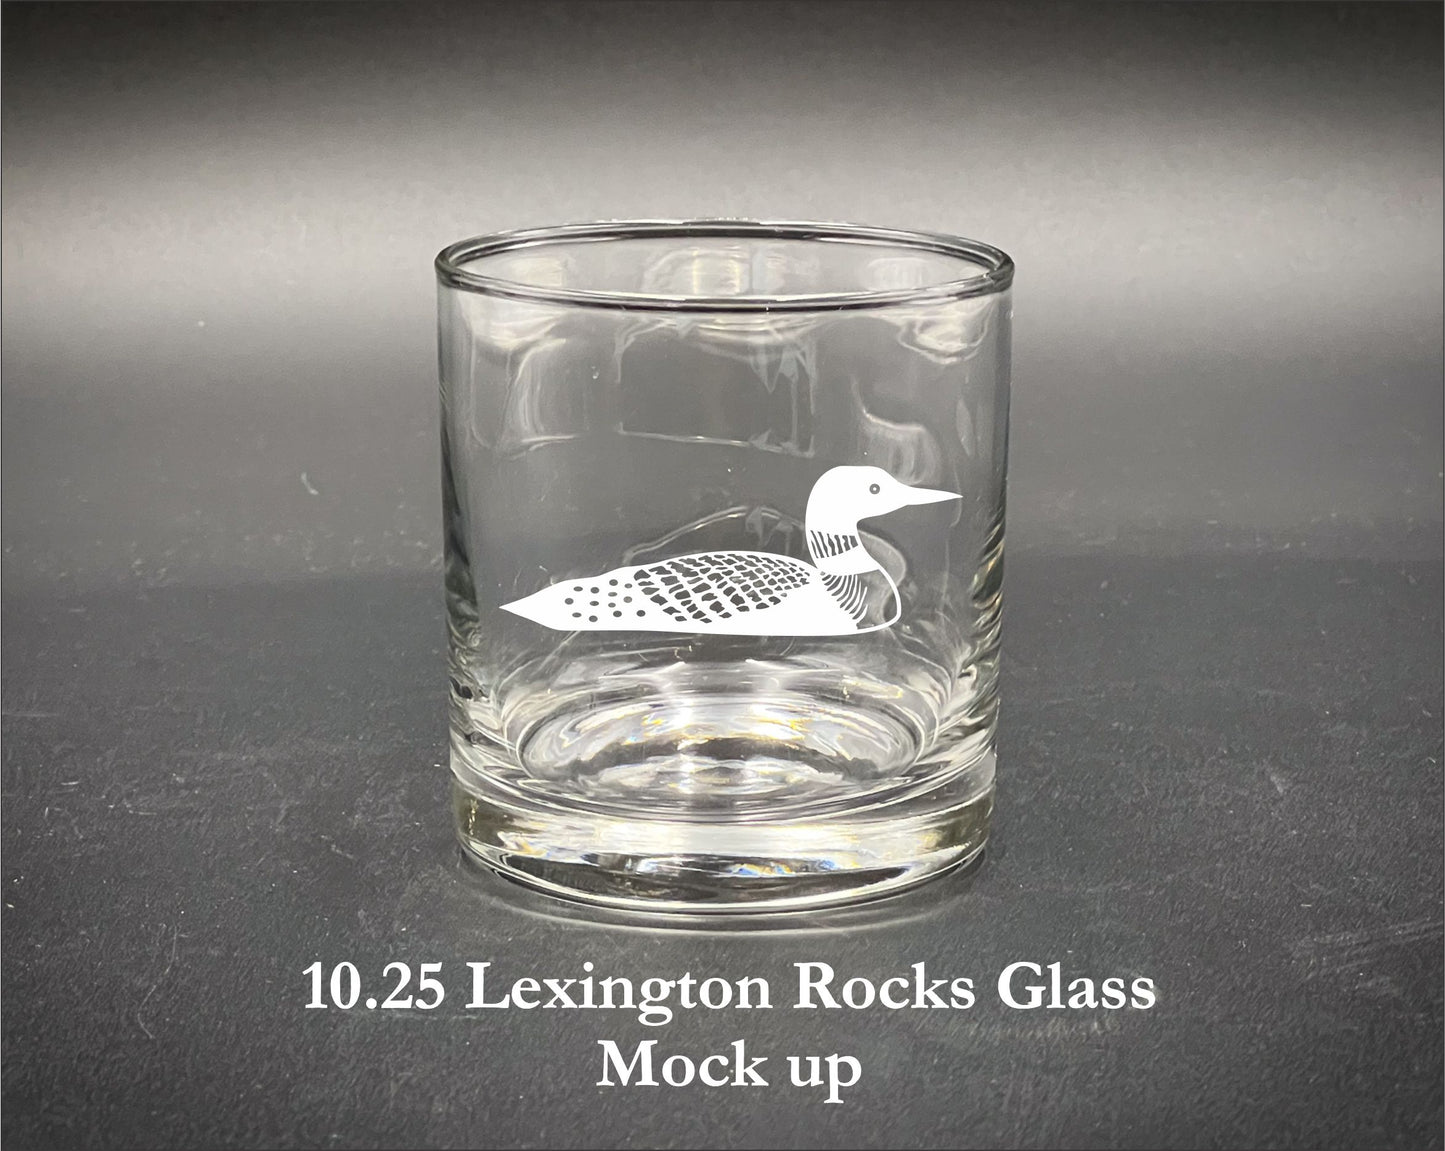 Loon Laser Engraved Glassware